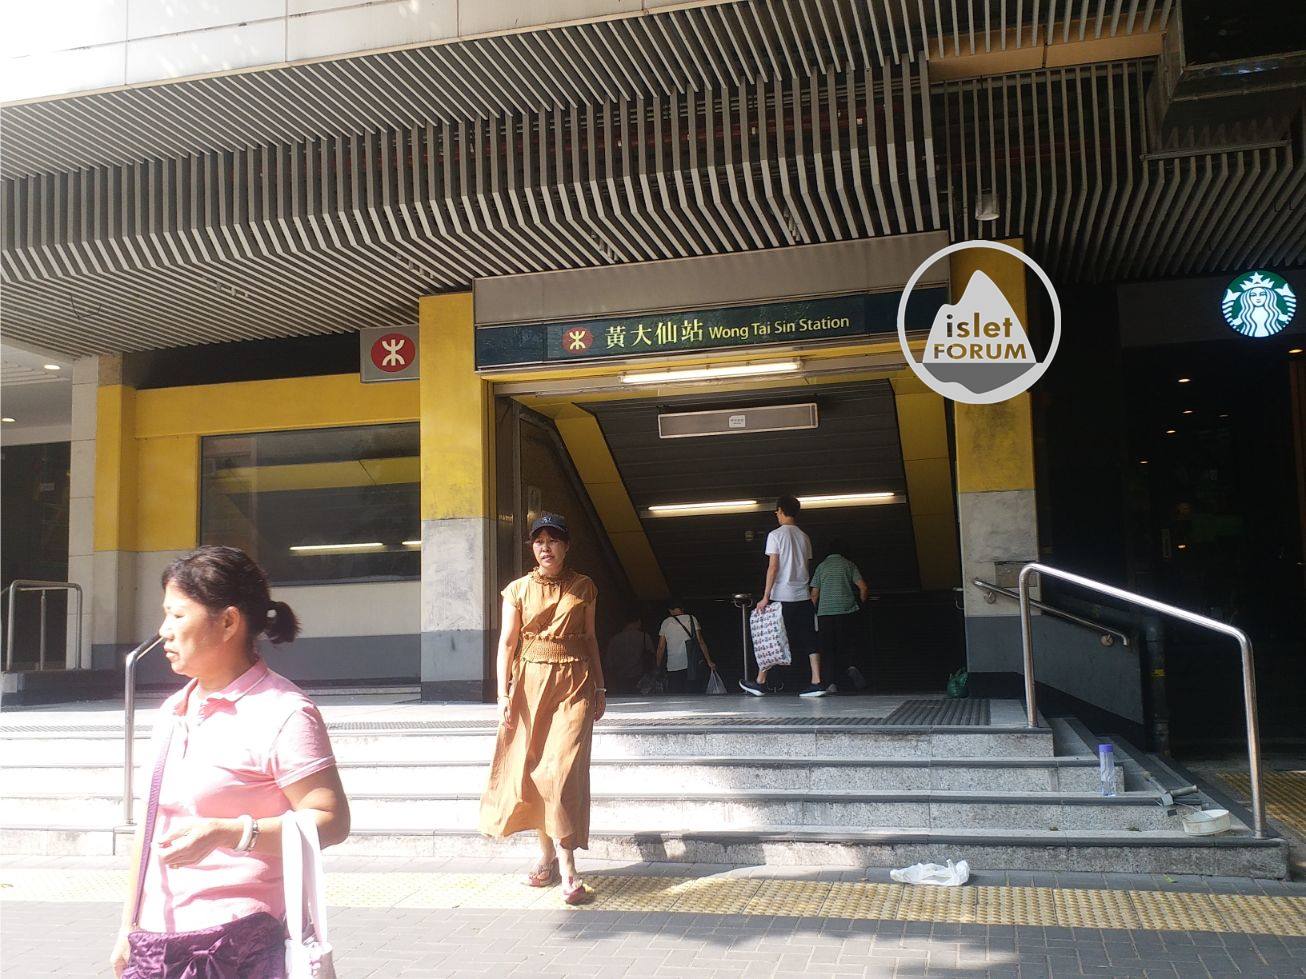 黃大仙站wong tai sin station (2).jpg